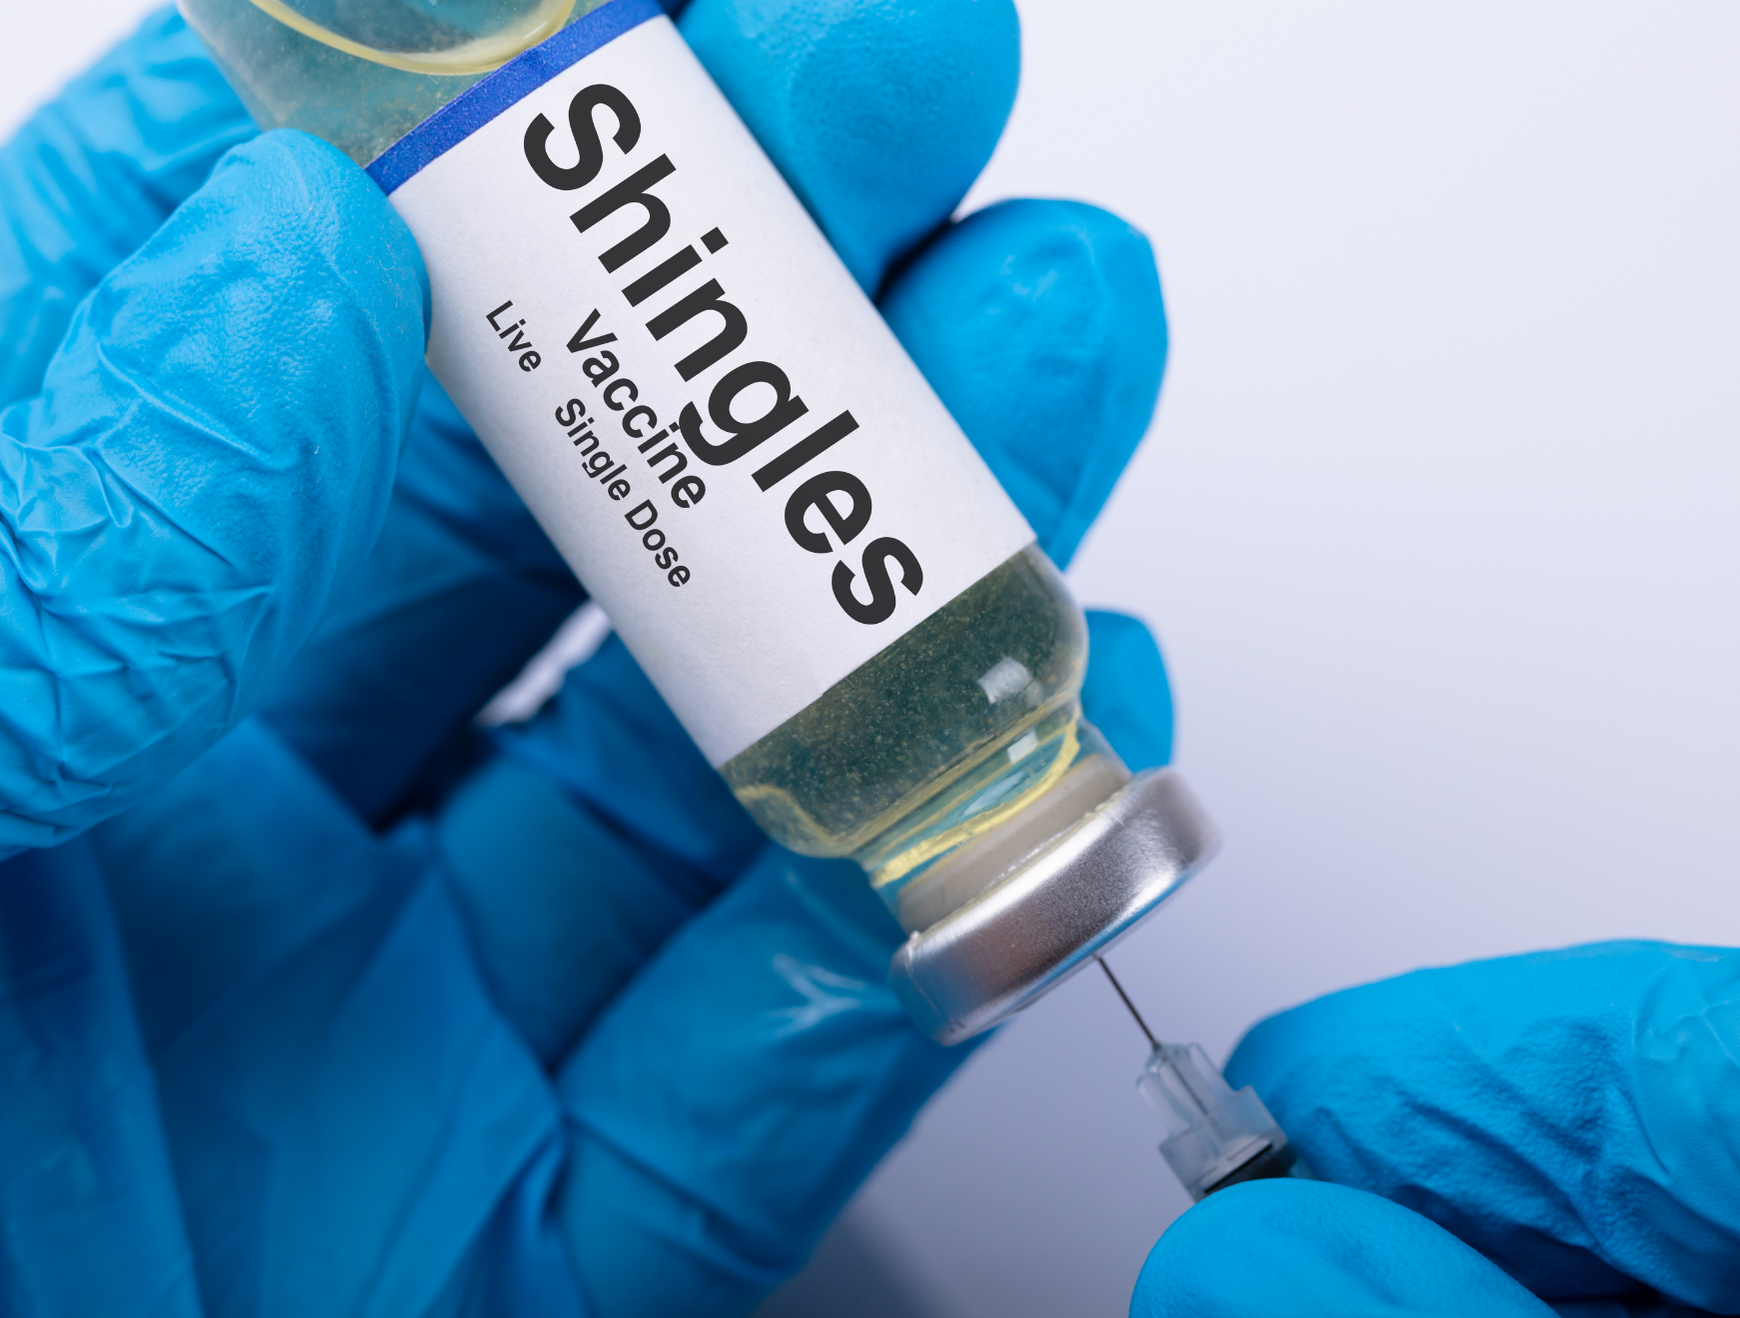 Shingles vaccine